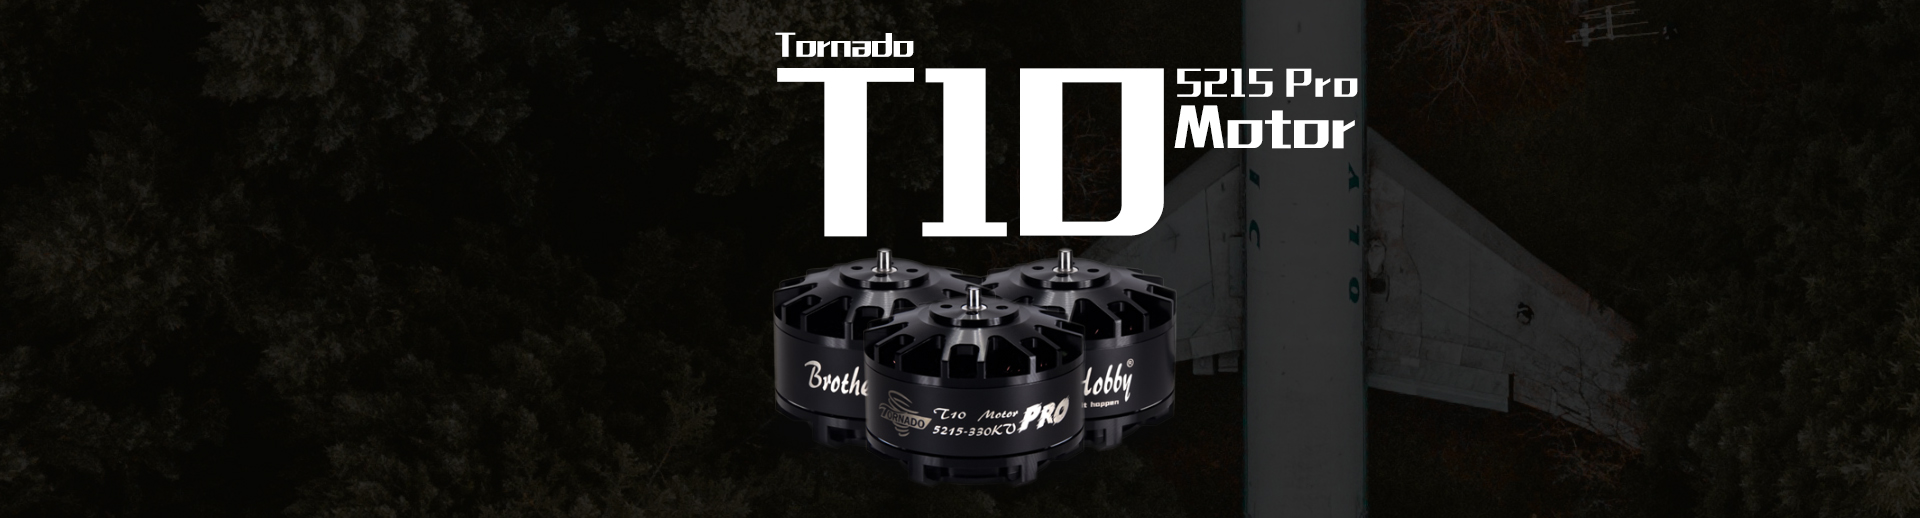 Tornado T10 5215 Pro